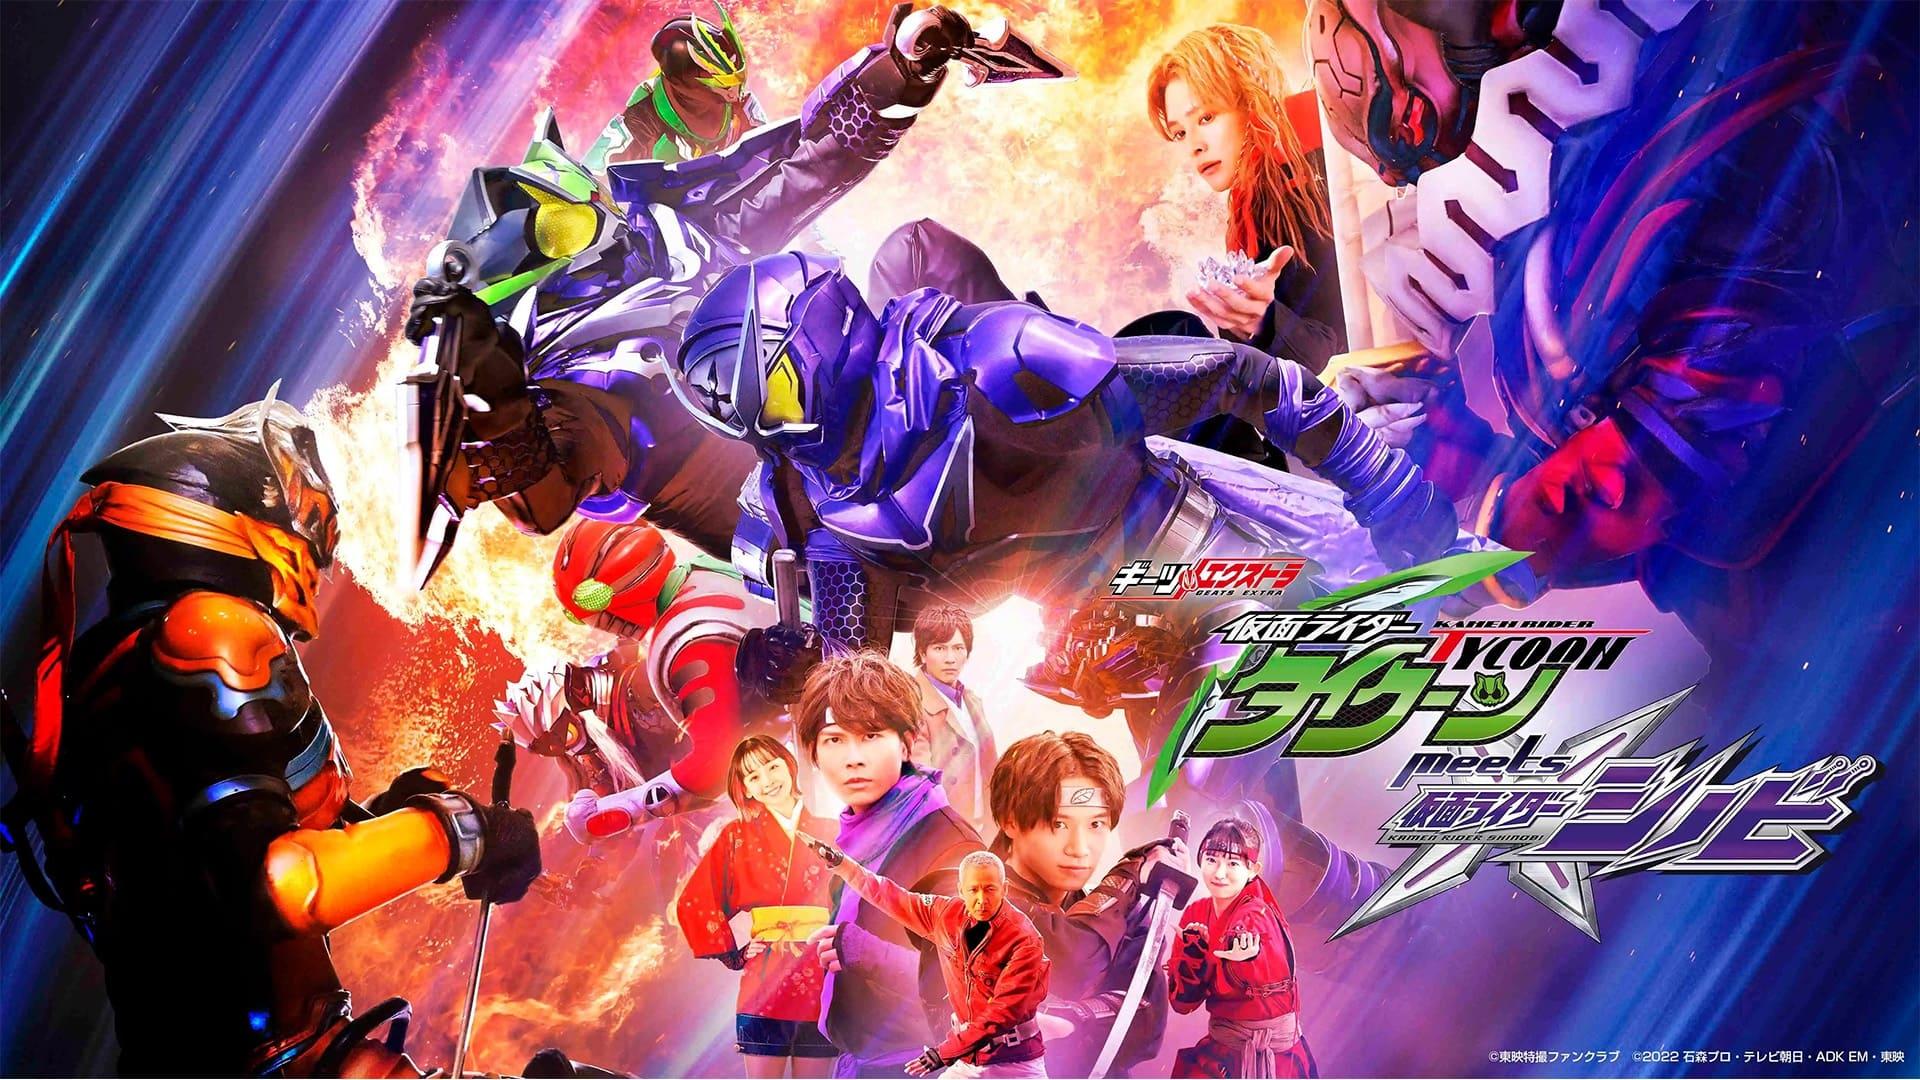 Geats Extra: Kamen Rider Tycoon meets Kamen Rider Shinobi backdrop